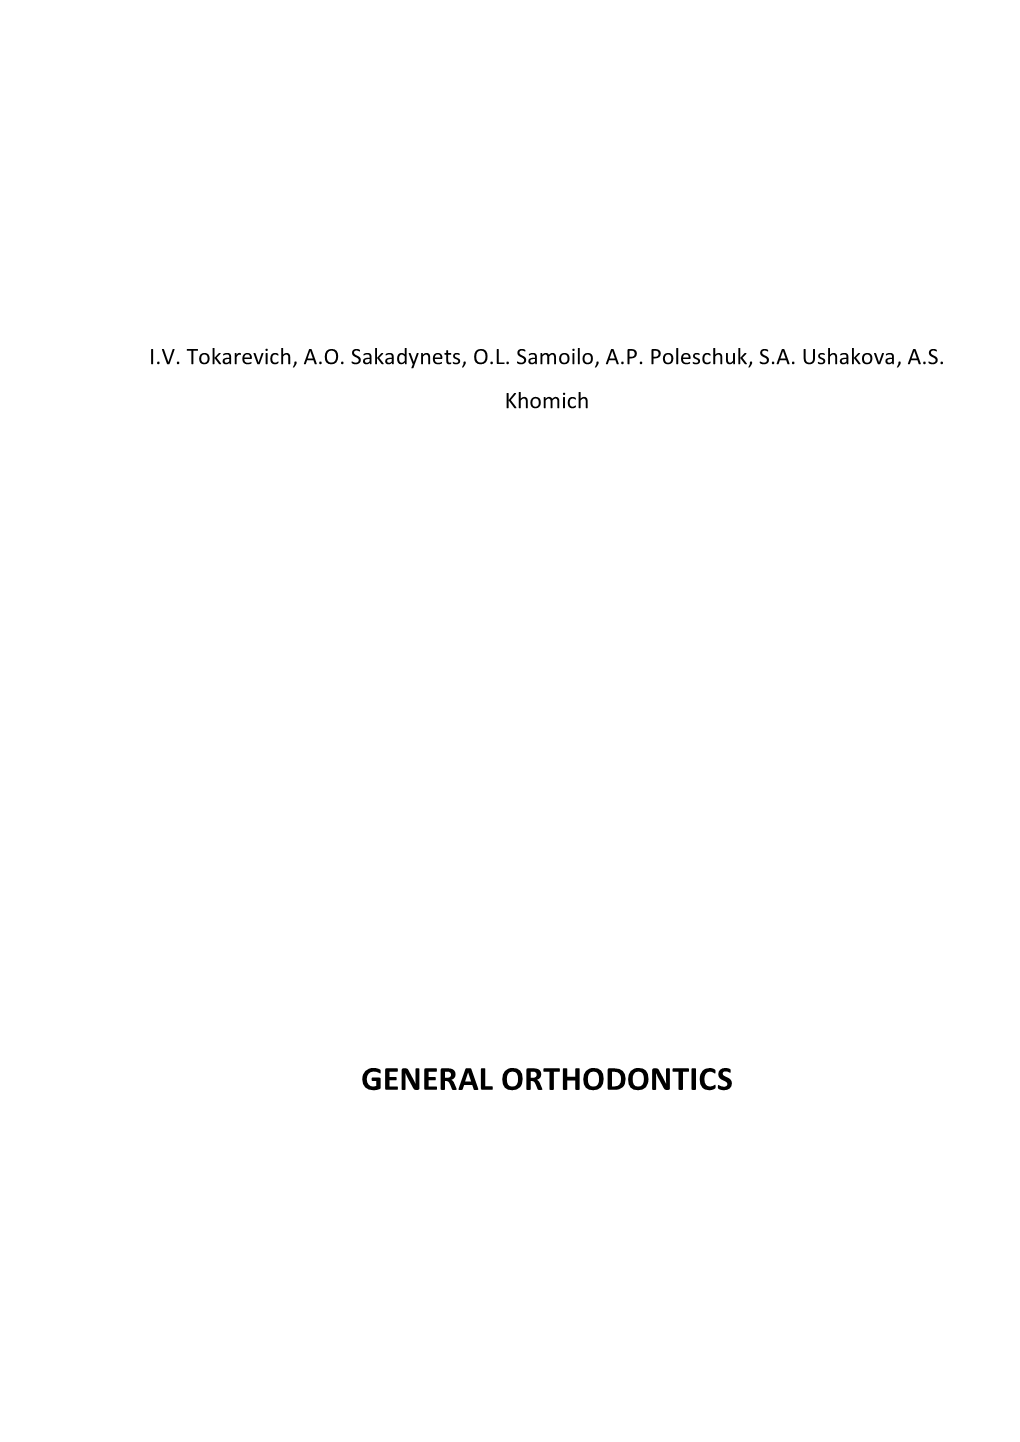 General Orthodontics